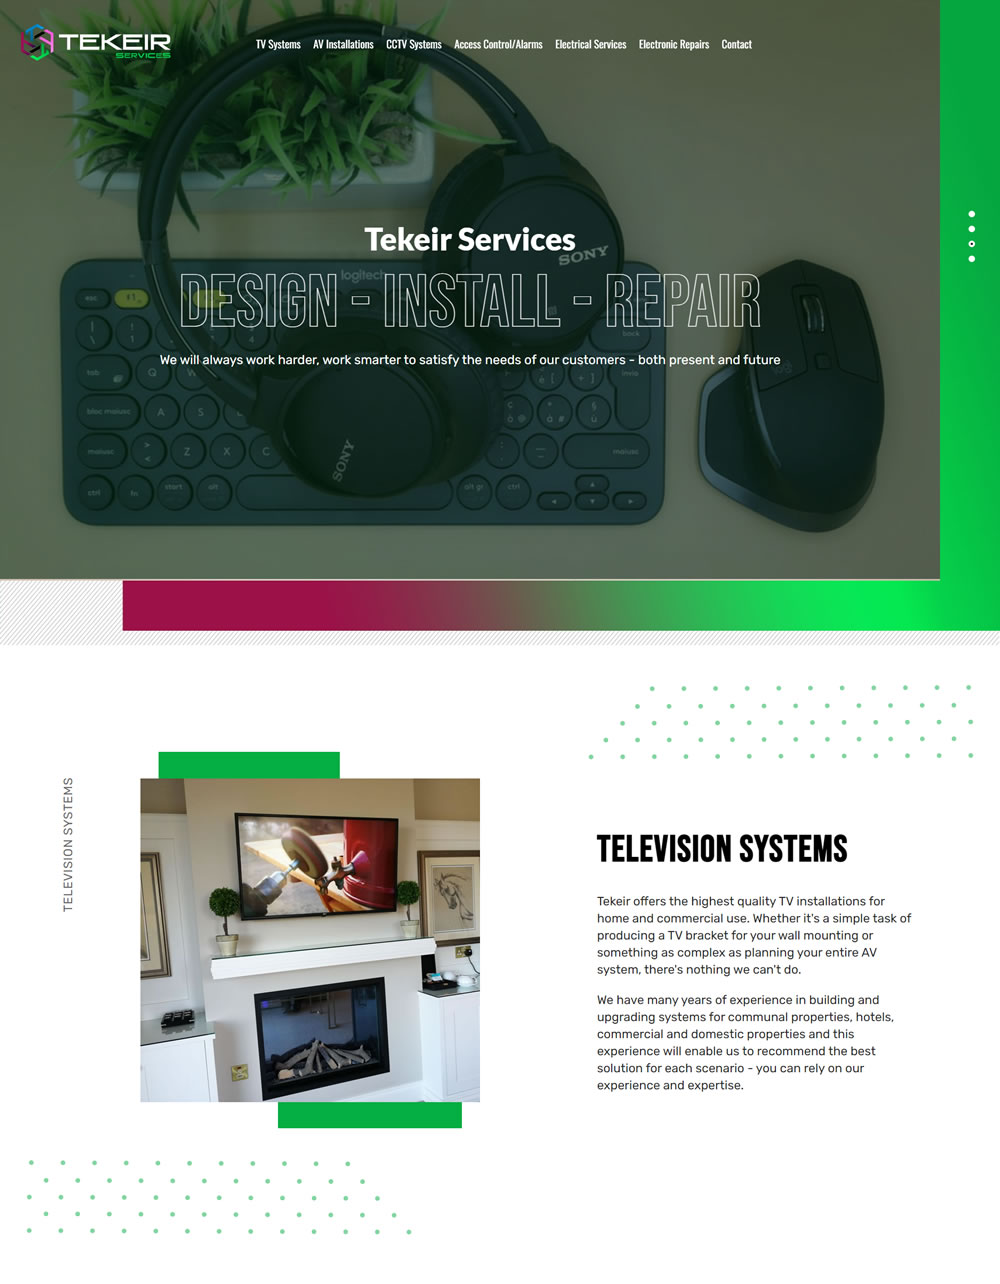 Tekeir Services